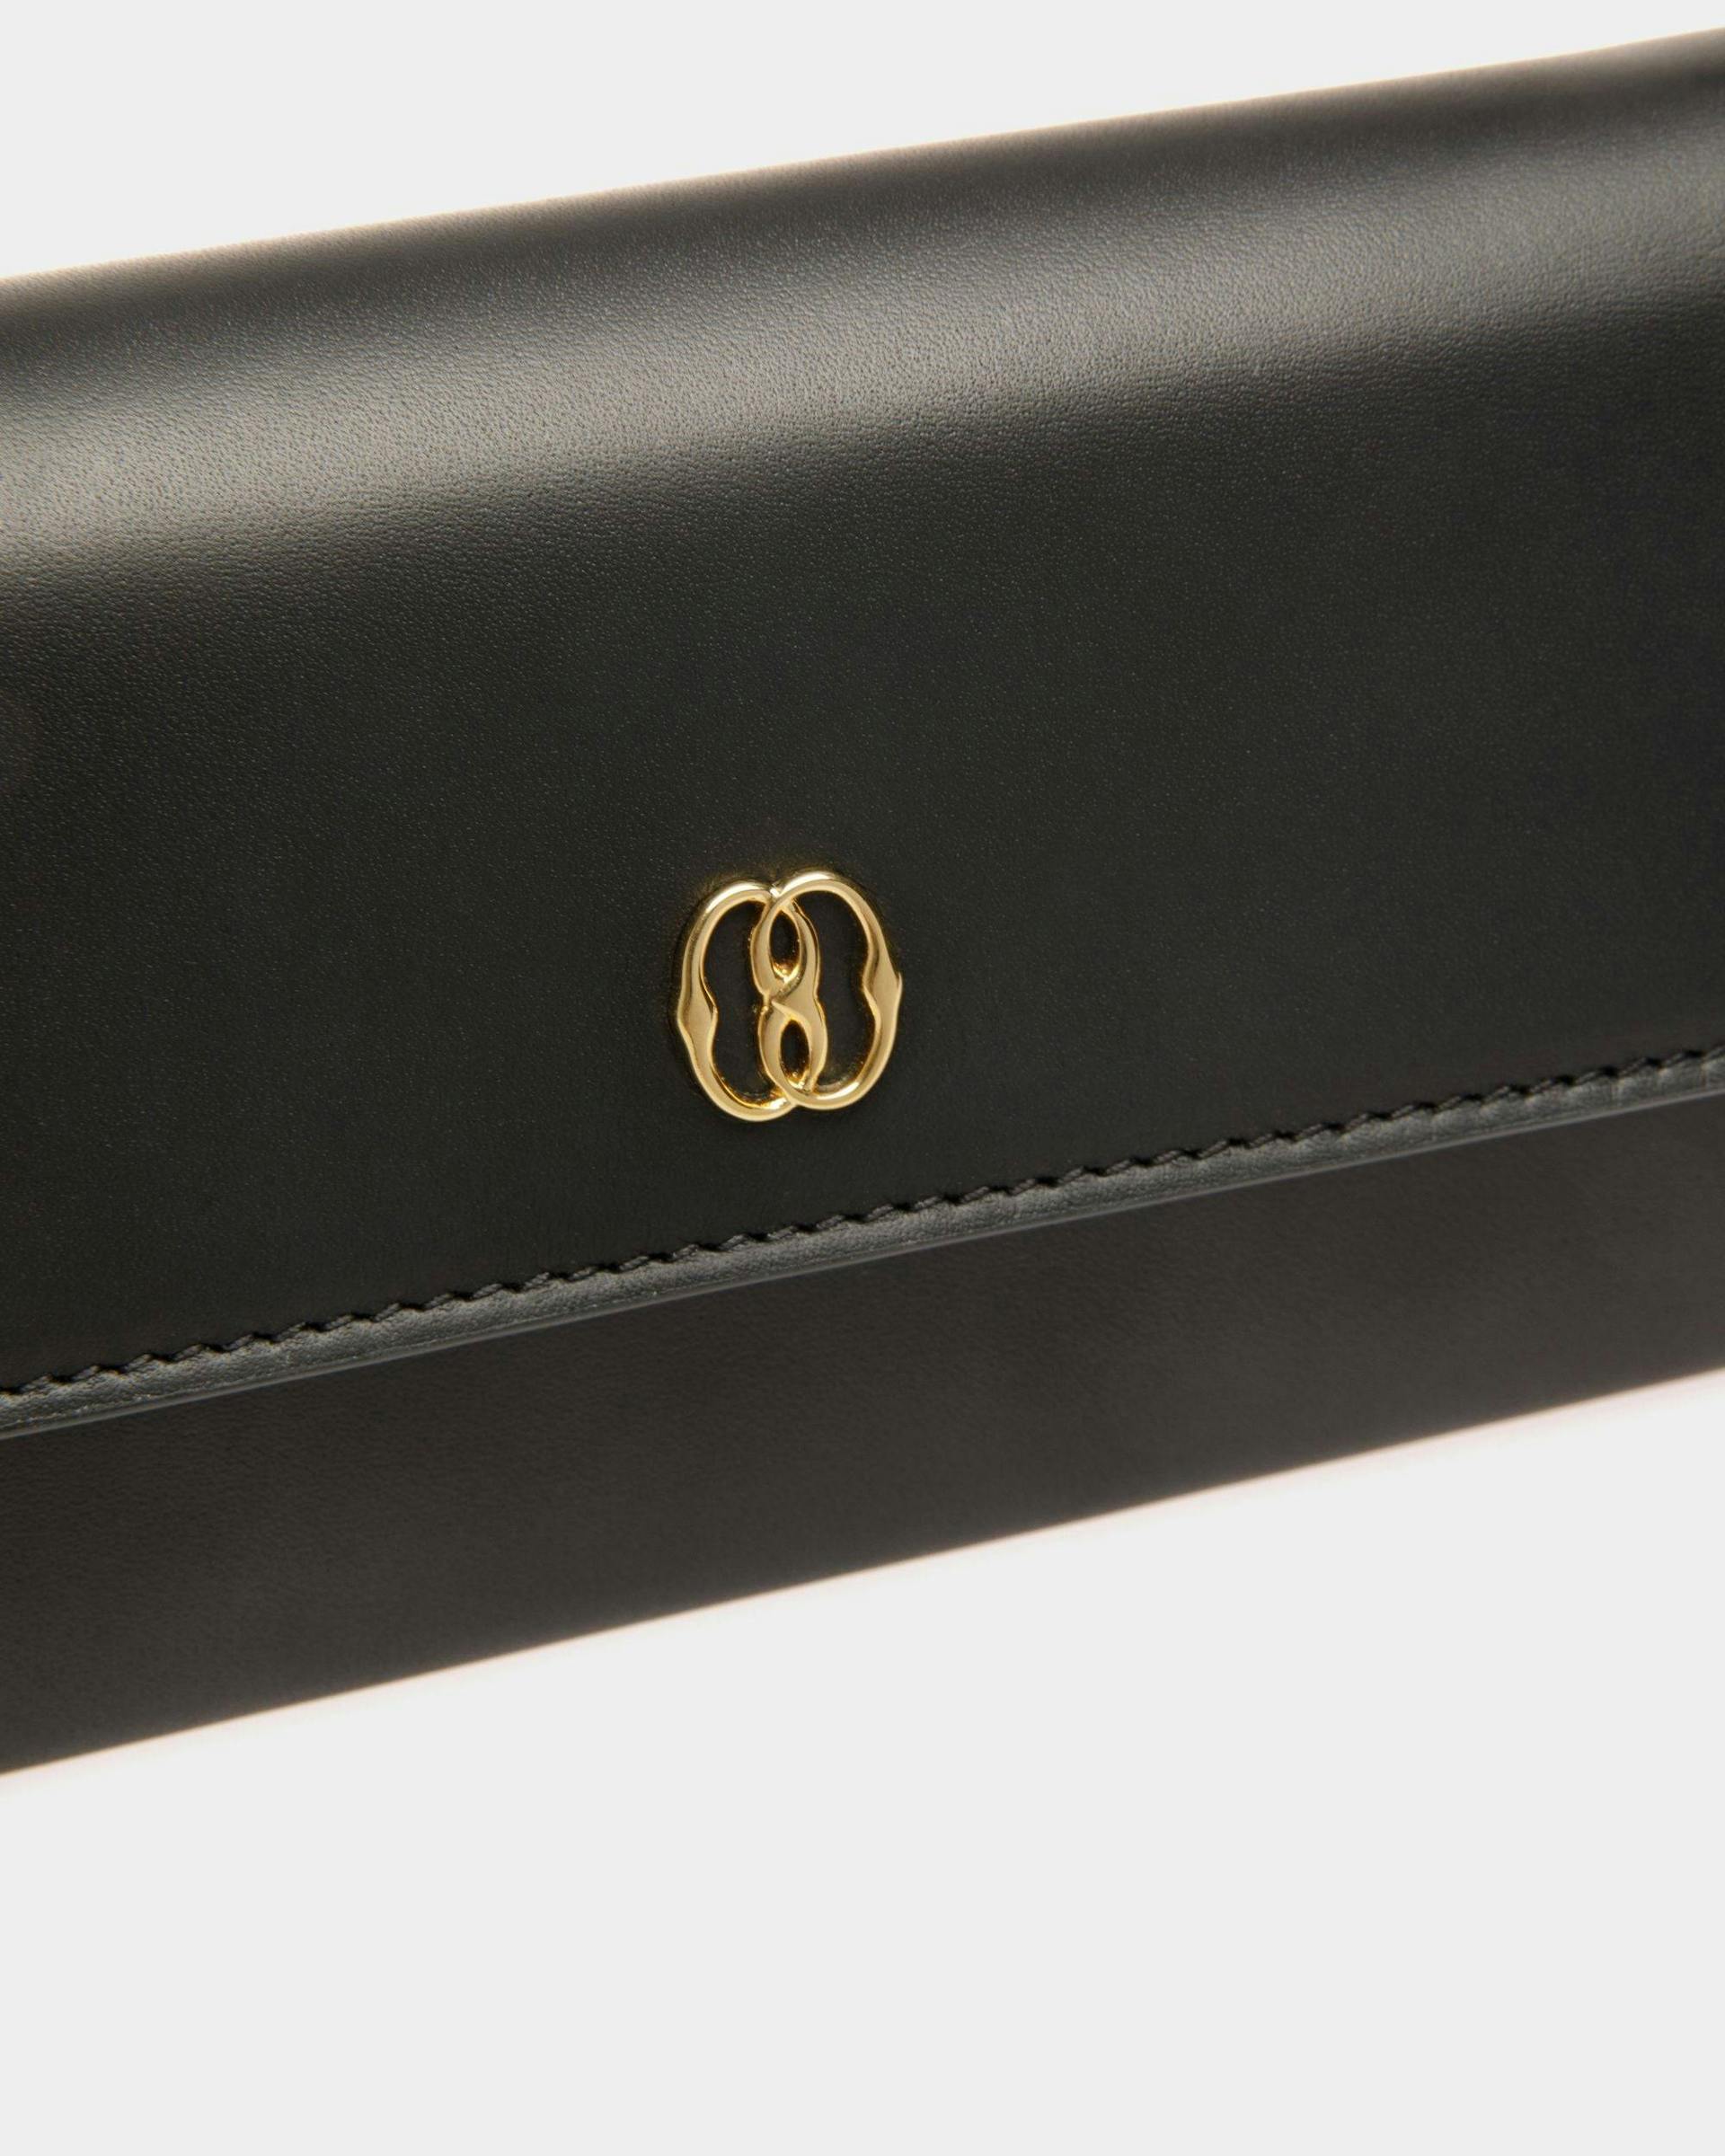 Women's Emblem Travel Wallet In Black Leather | Bally | Still Life Detail